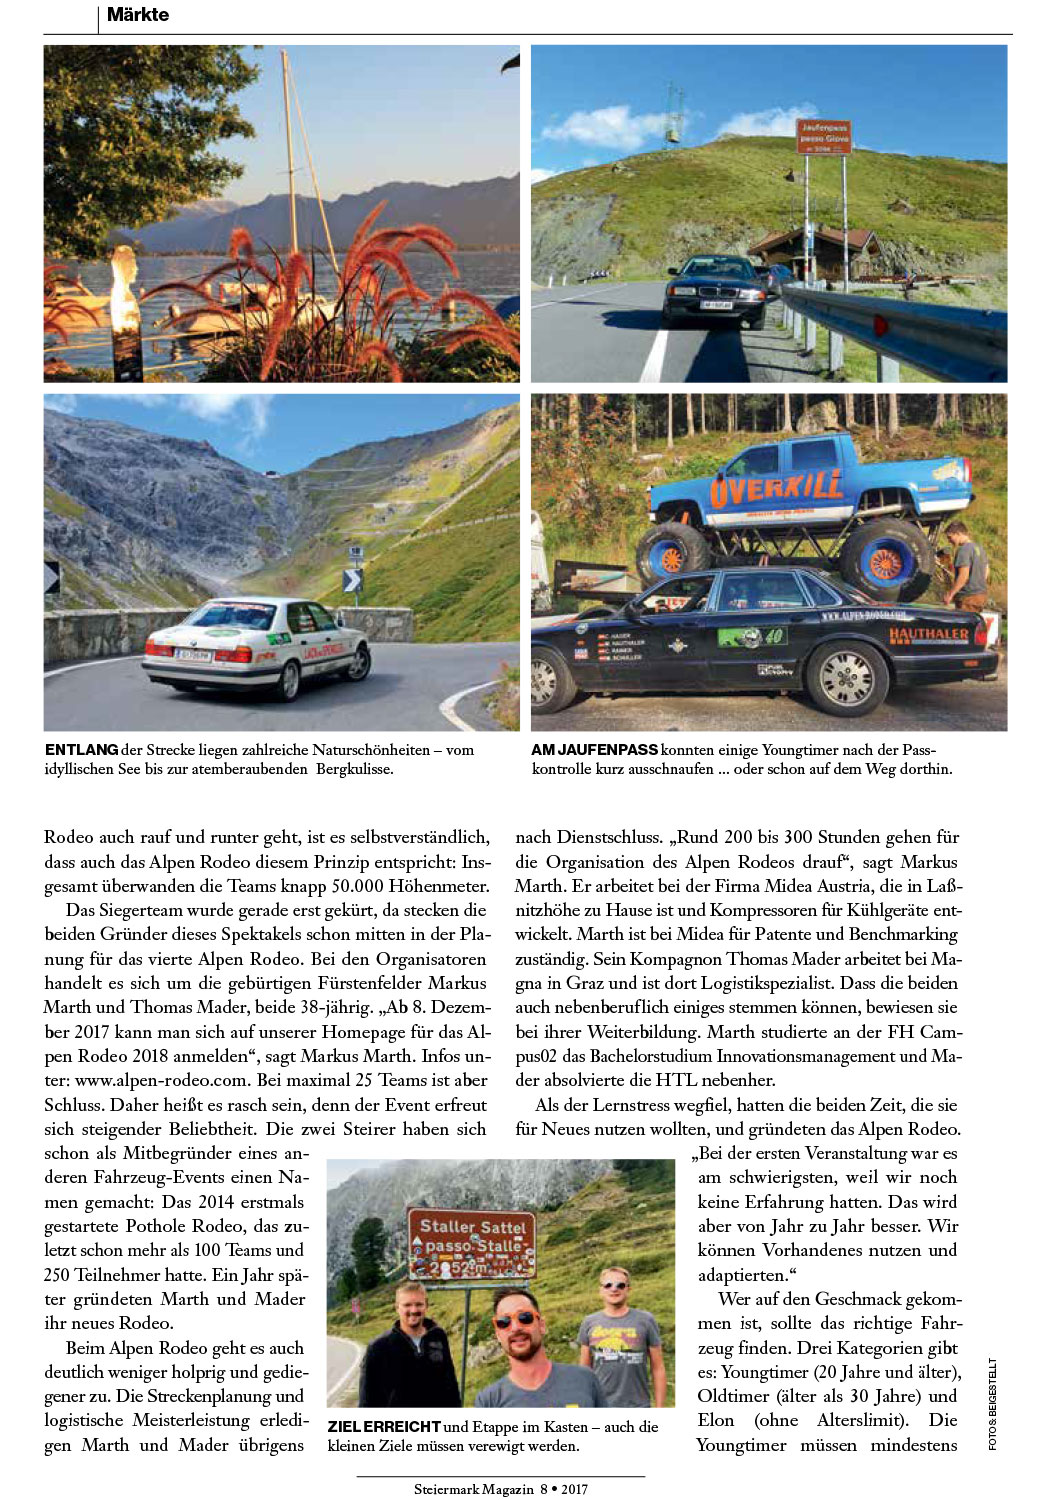 Alpen-Rodeo-Bericht-Steiermark-Magazin-Oktober-2017-3.jpg